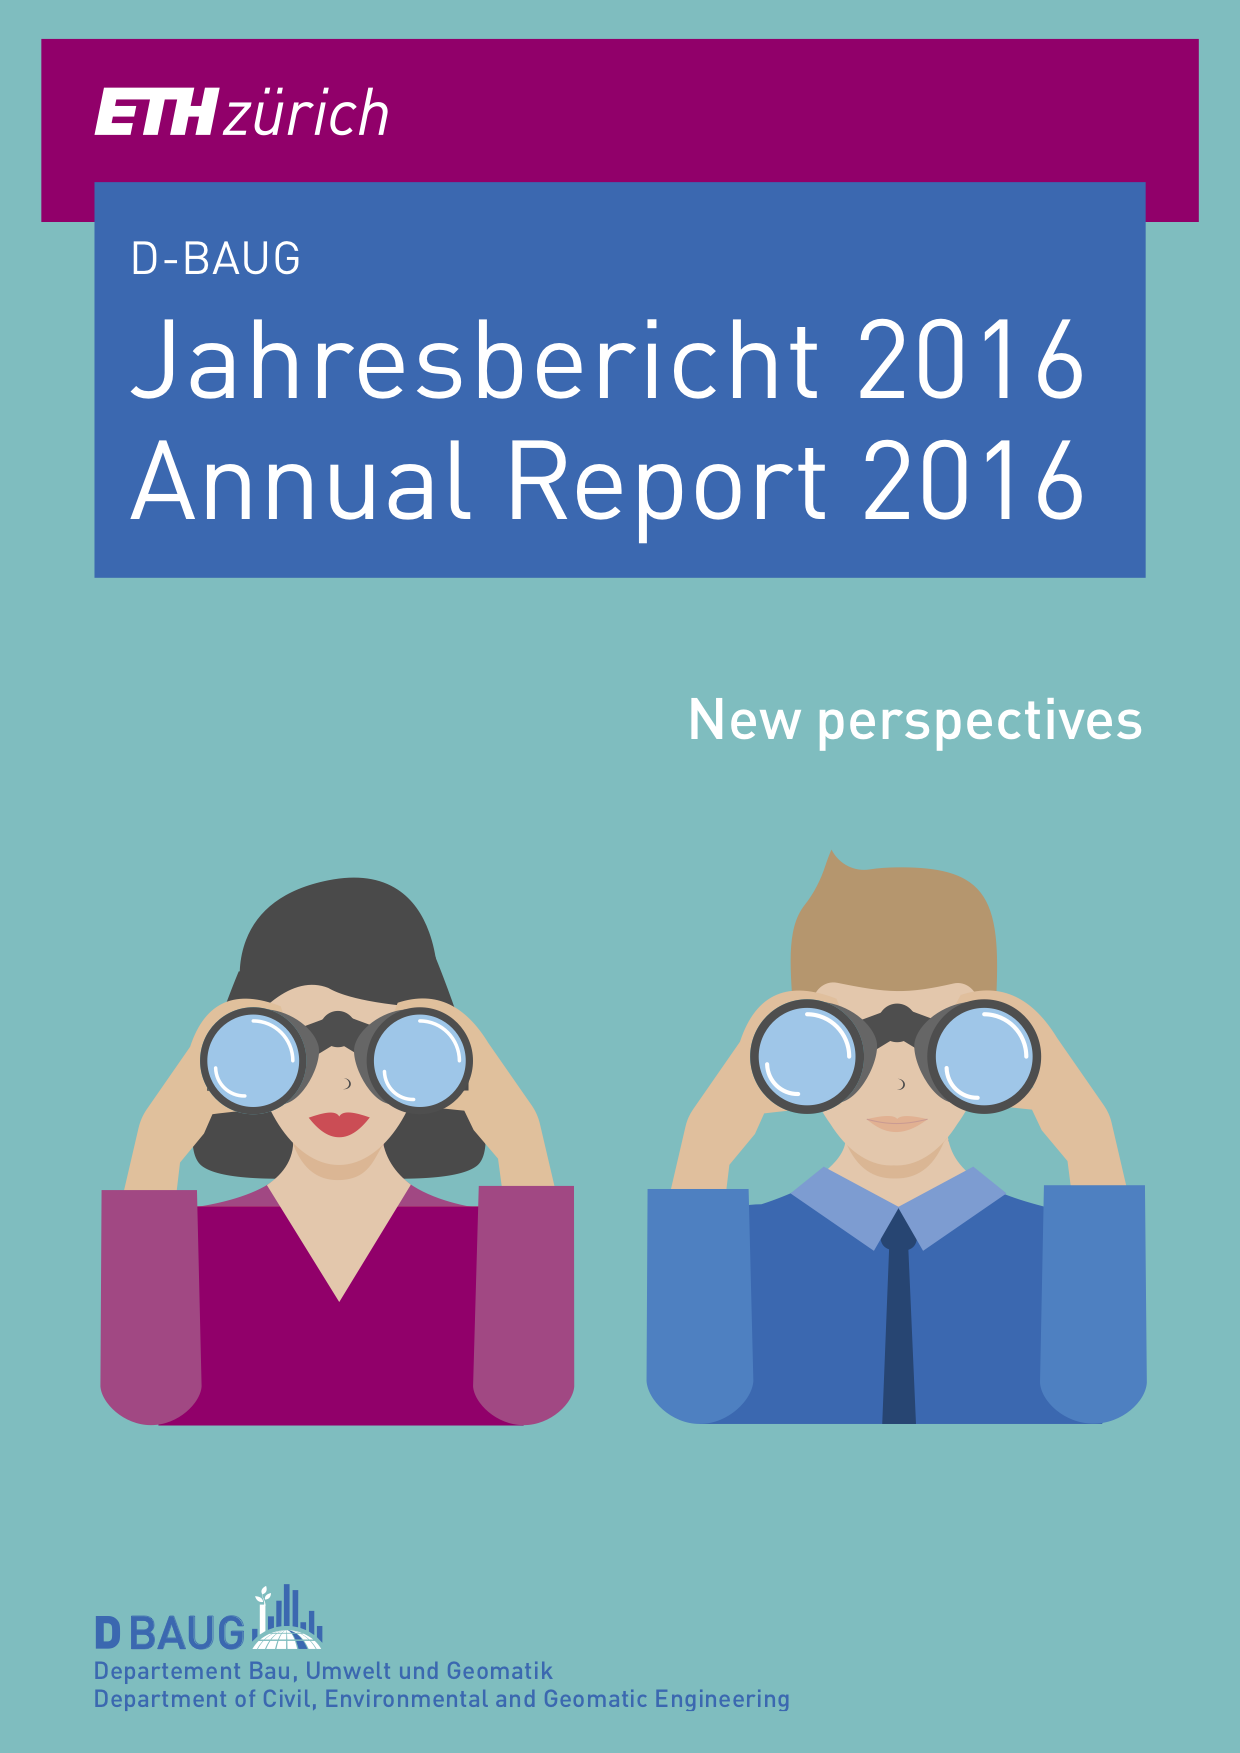 D-BAUG Annual report 2016